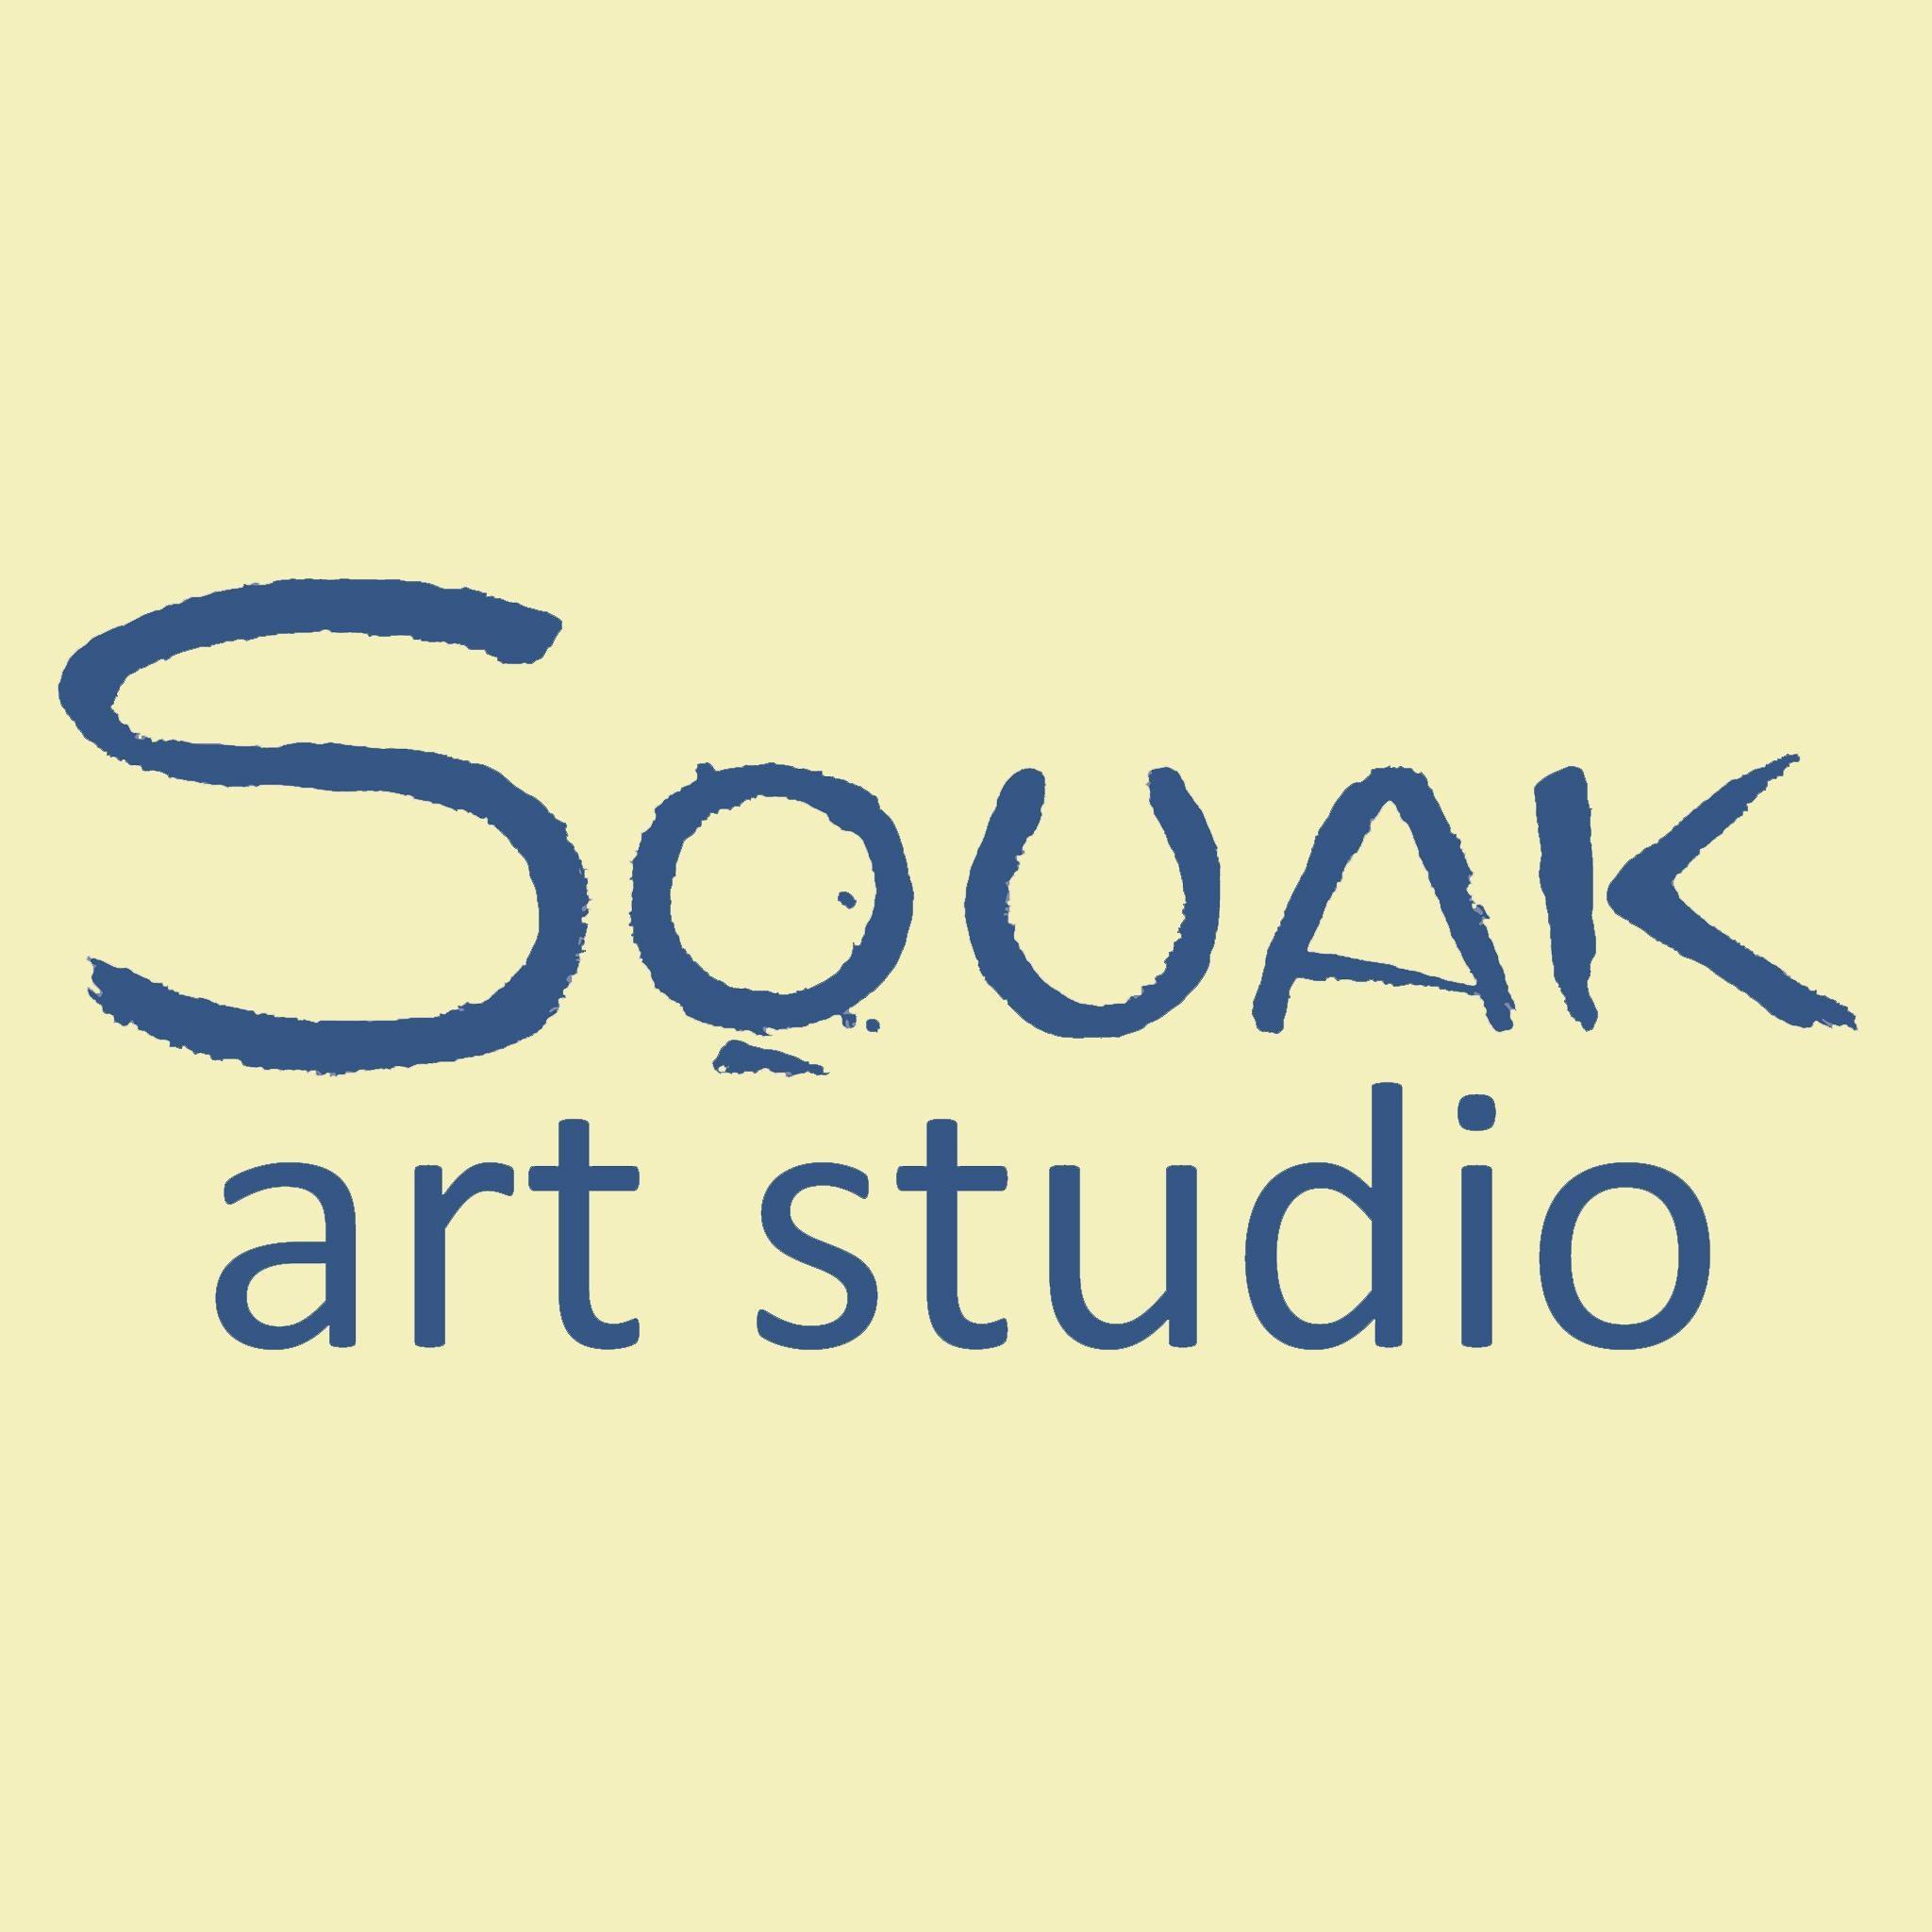 Company logo of Squak Art Studio